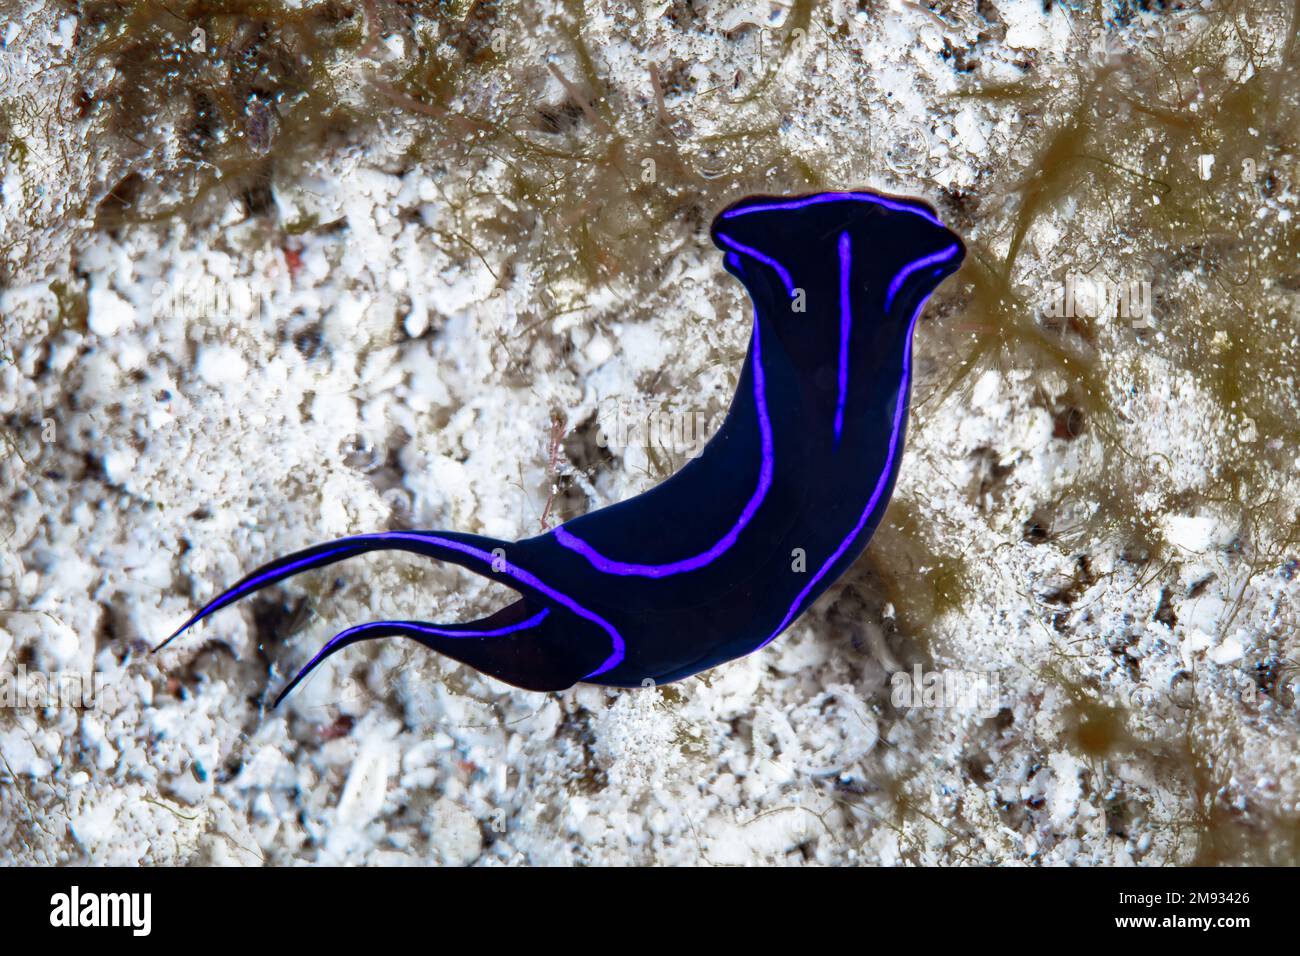 A small Blue Velvet headshield slug, Chelidonura varians, crawls across the sandy seafloor of a reef in the Solomon Islands. Stock Photo